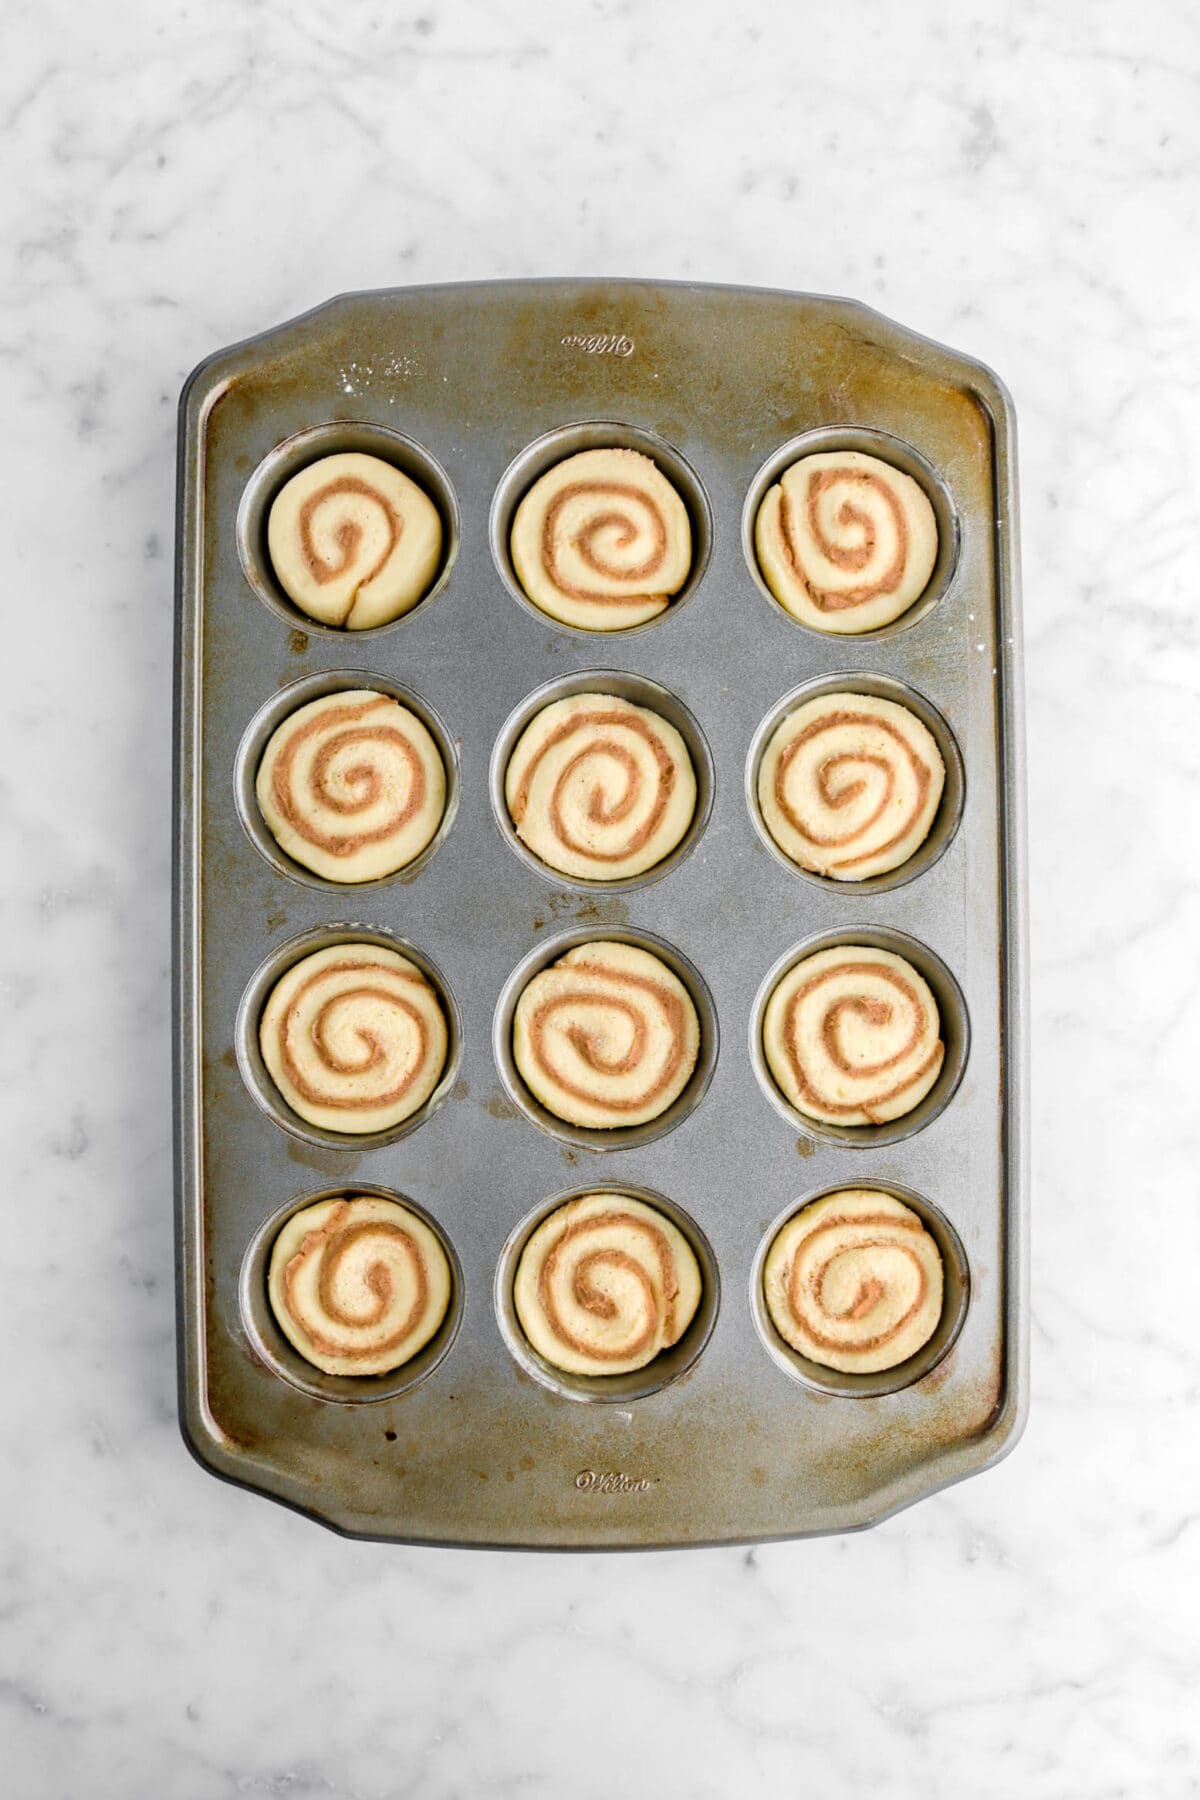 proofed cinnamon rolls in muffin pan.